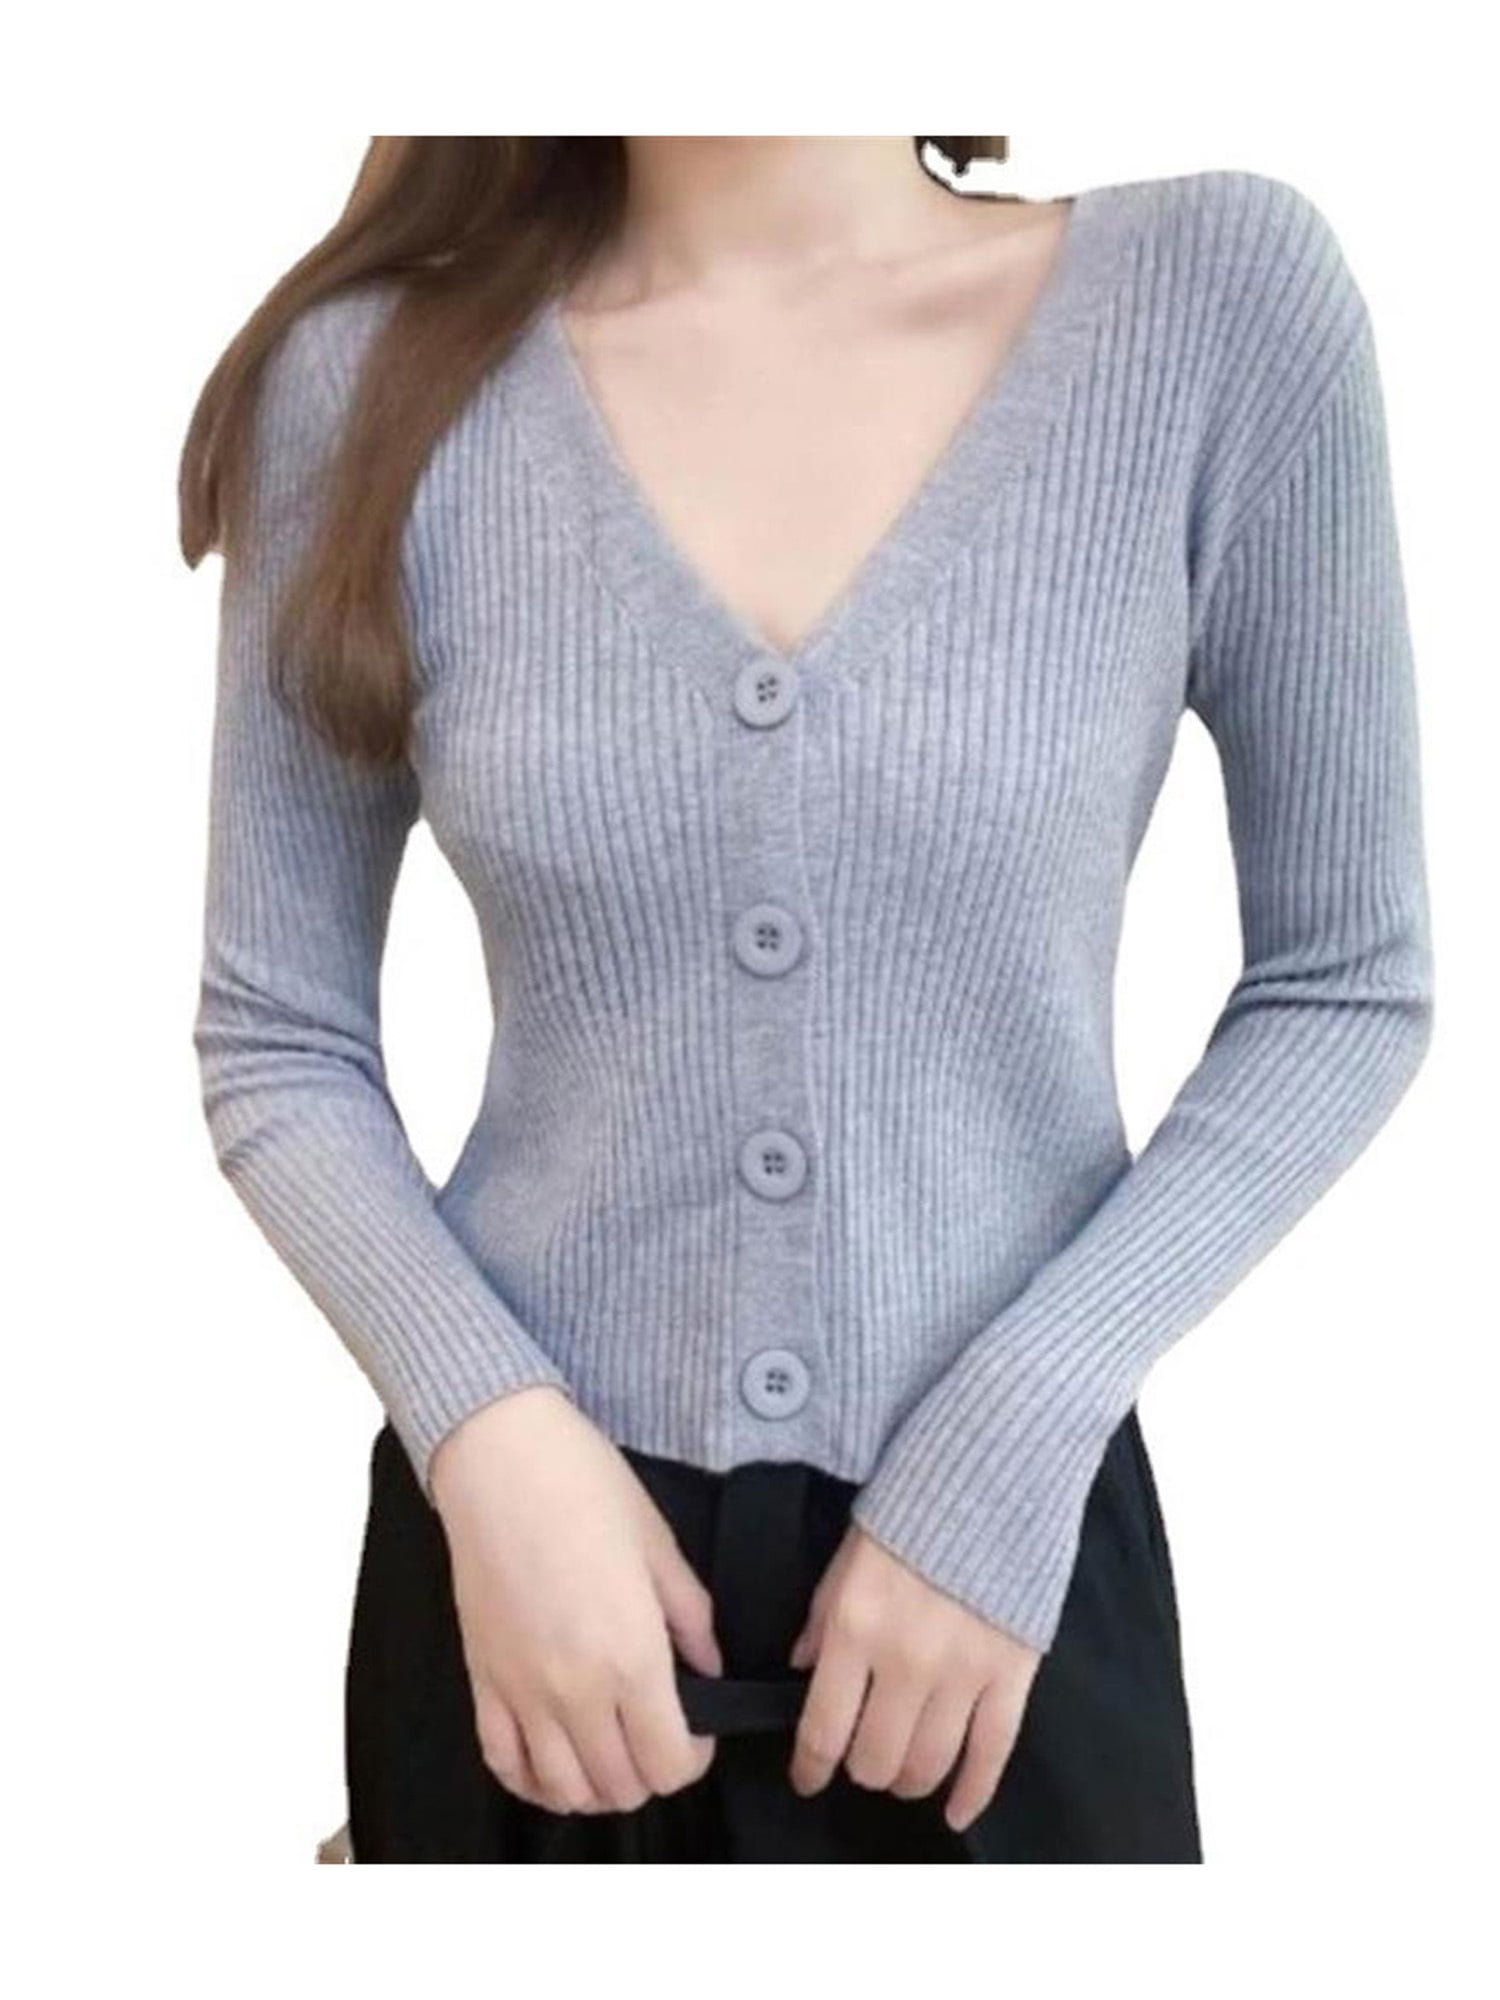 New Women Jacket Slim Knit Coat Cardigan Sweater Outwear Short Tops Solid Casual